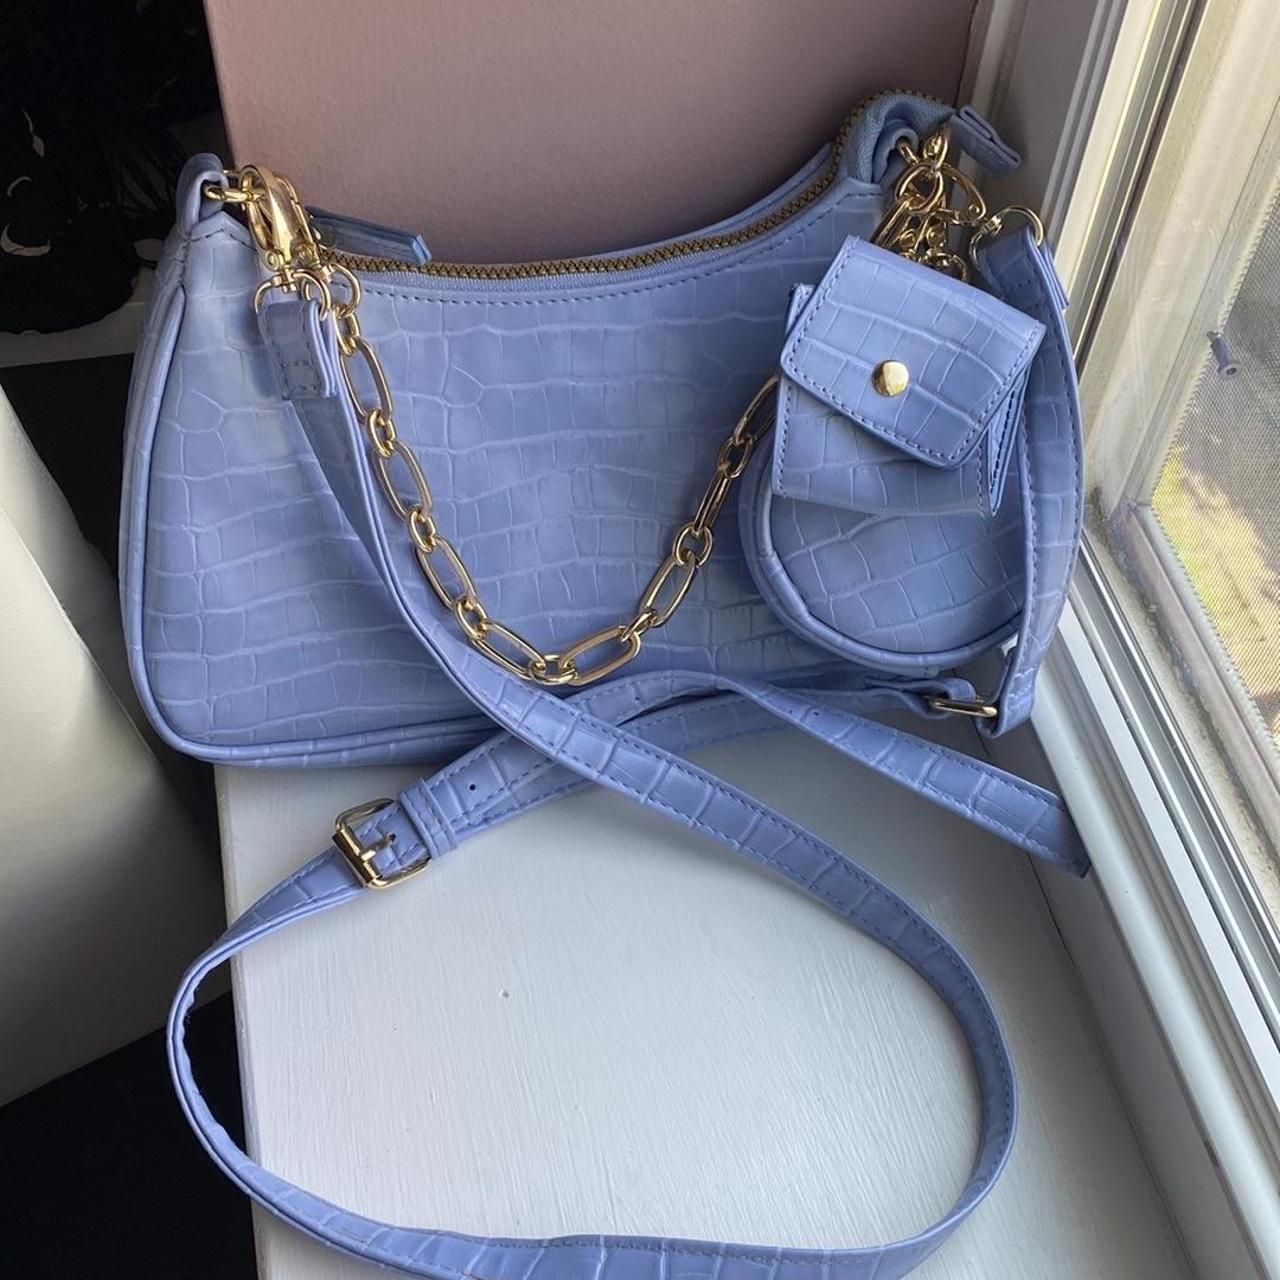 Stylish Light Blue Purse - Crossbody Bag - Vegan Leather Purse - Lulus